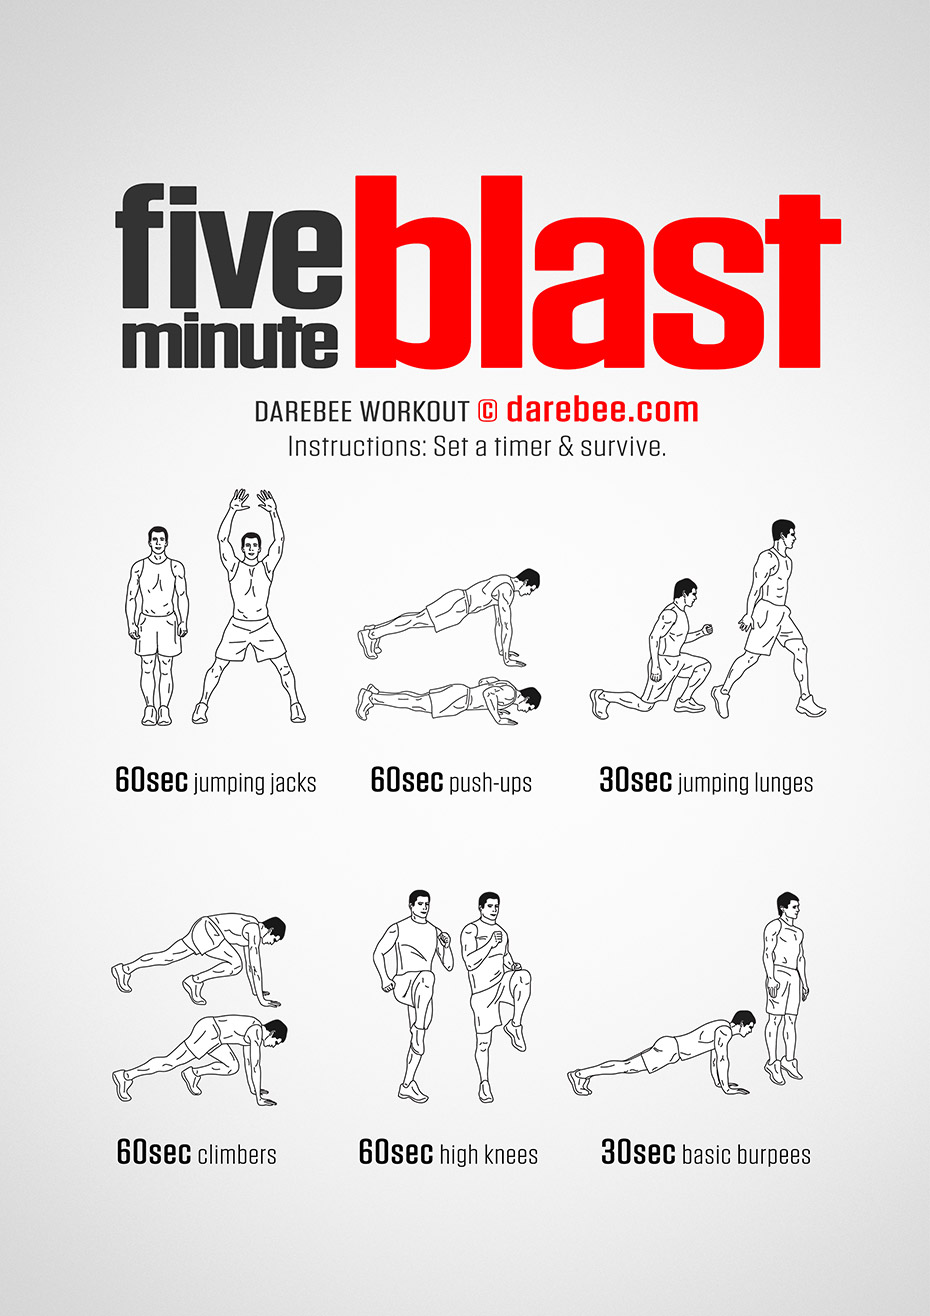 Five Minute Blast Workout